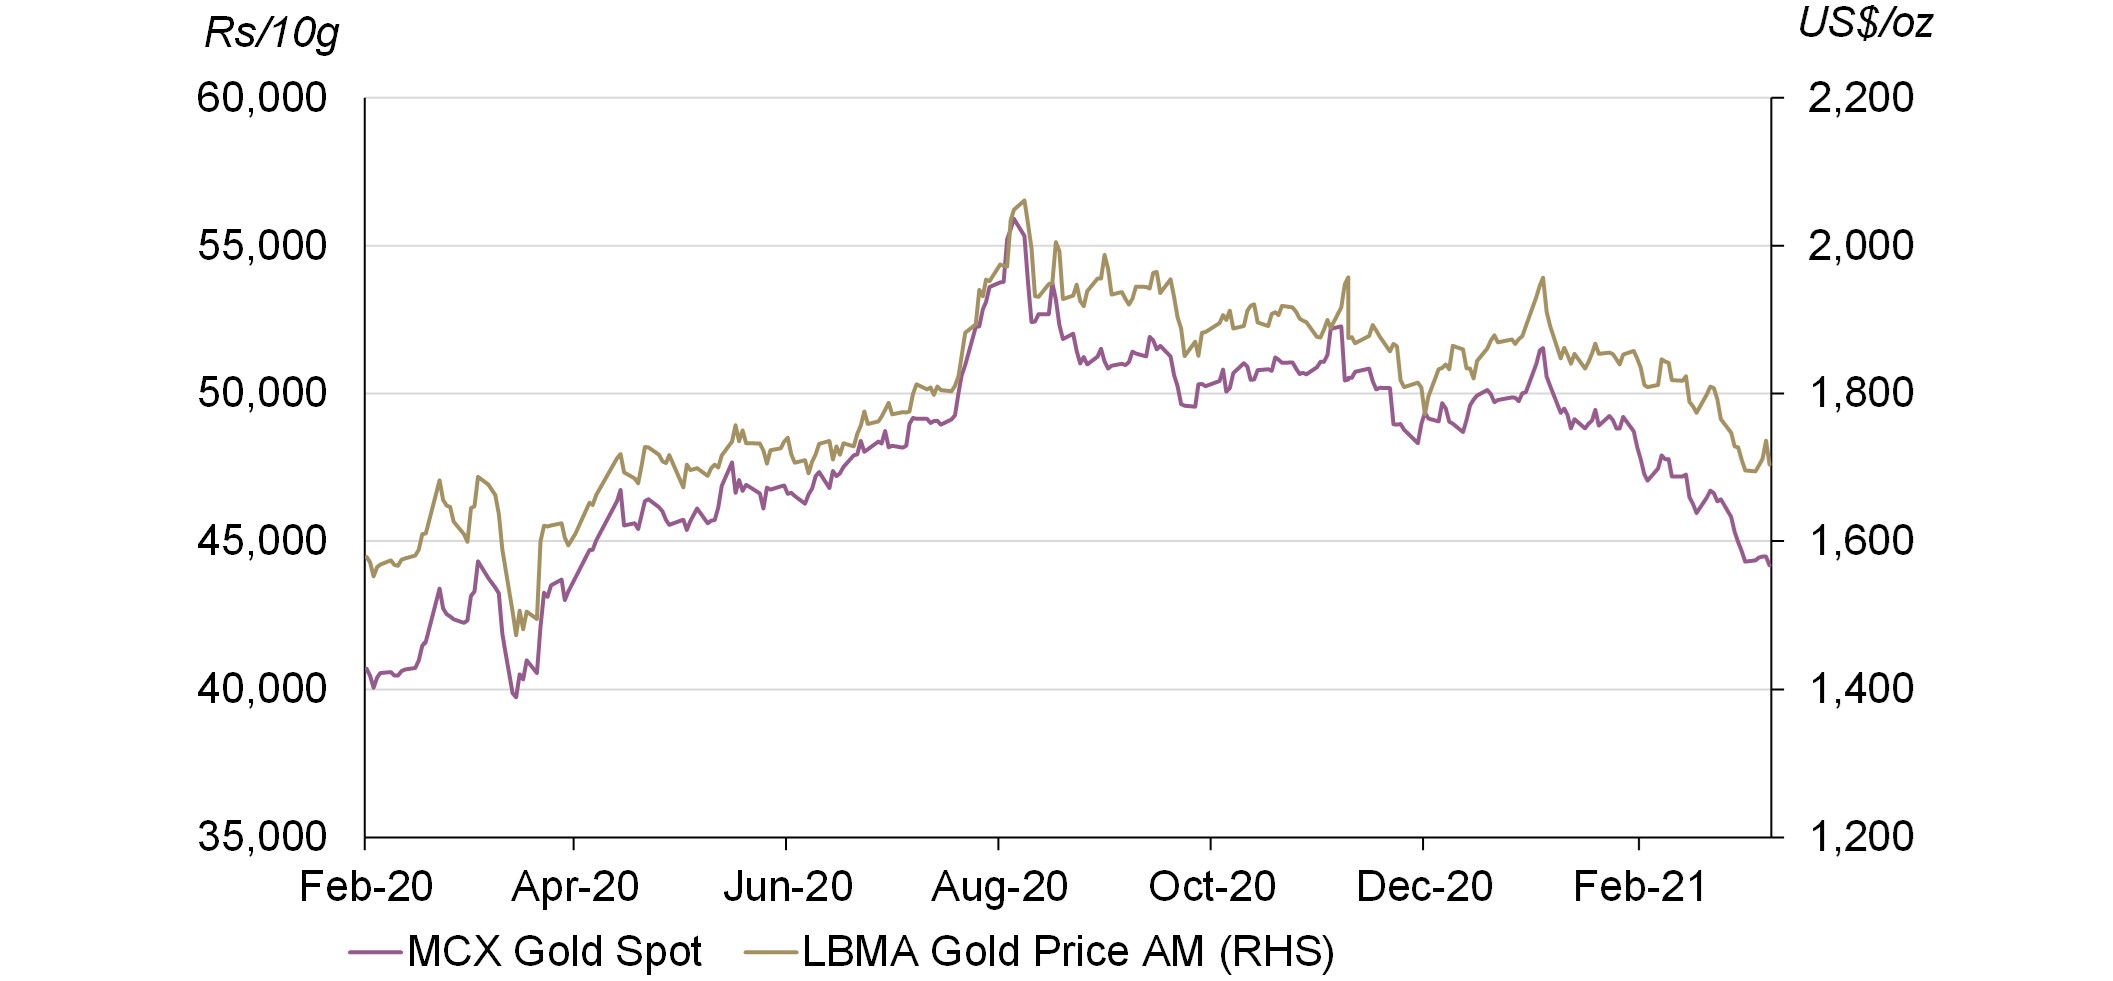 Gold market price